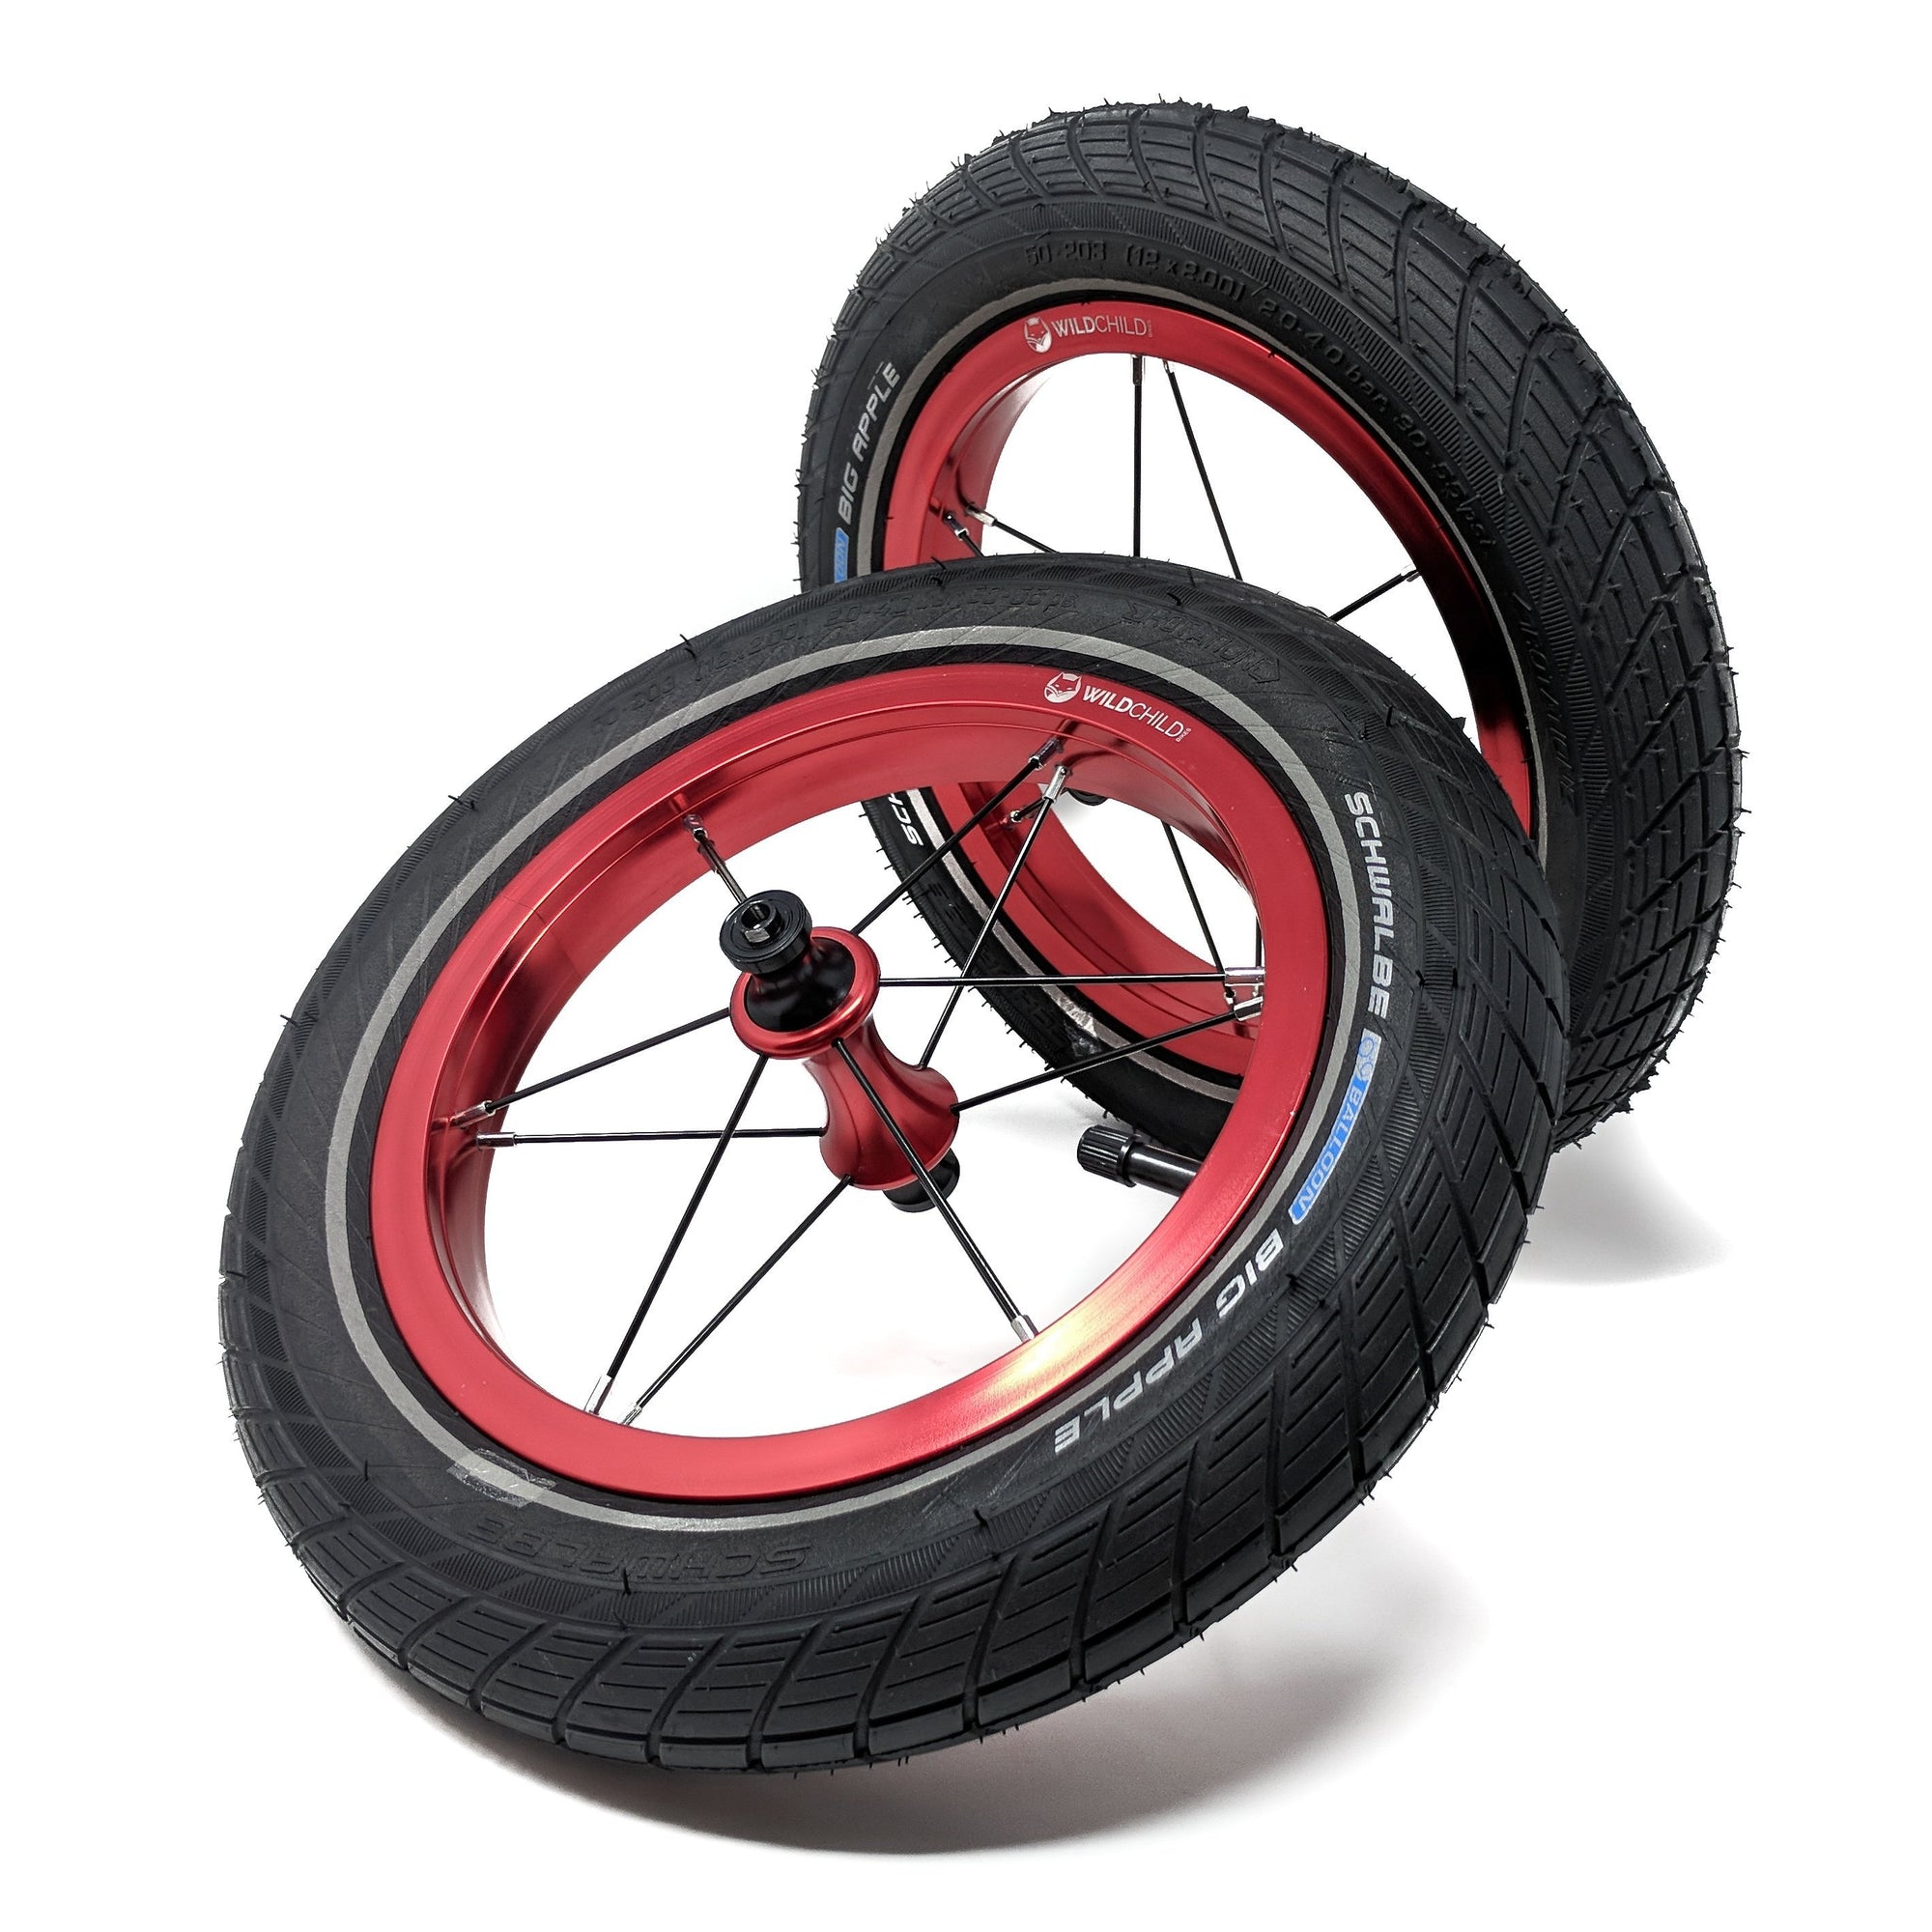 strider replacement wheels